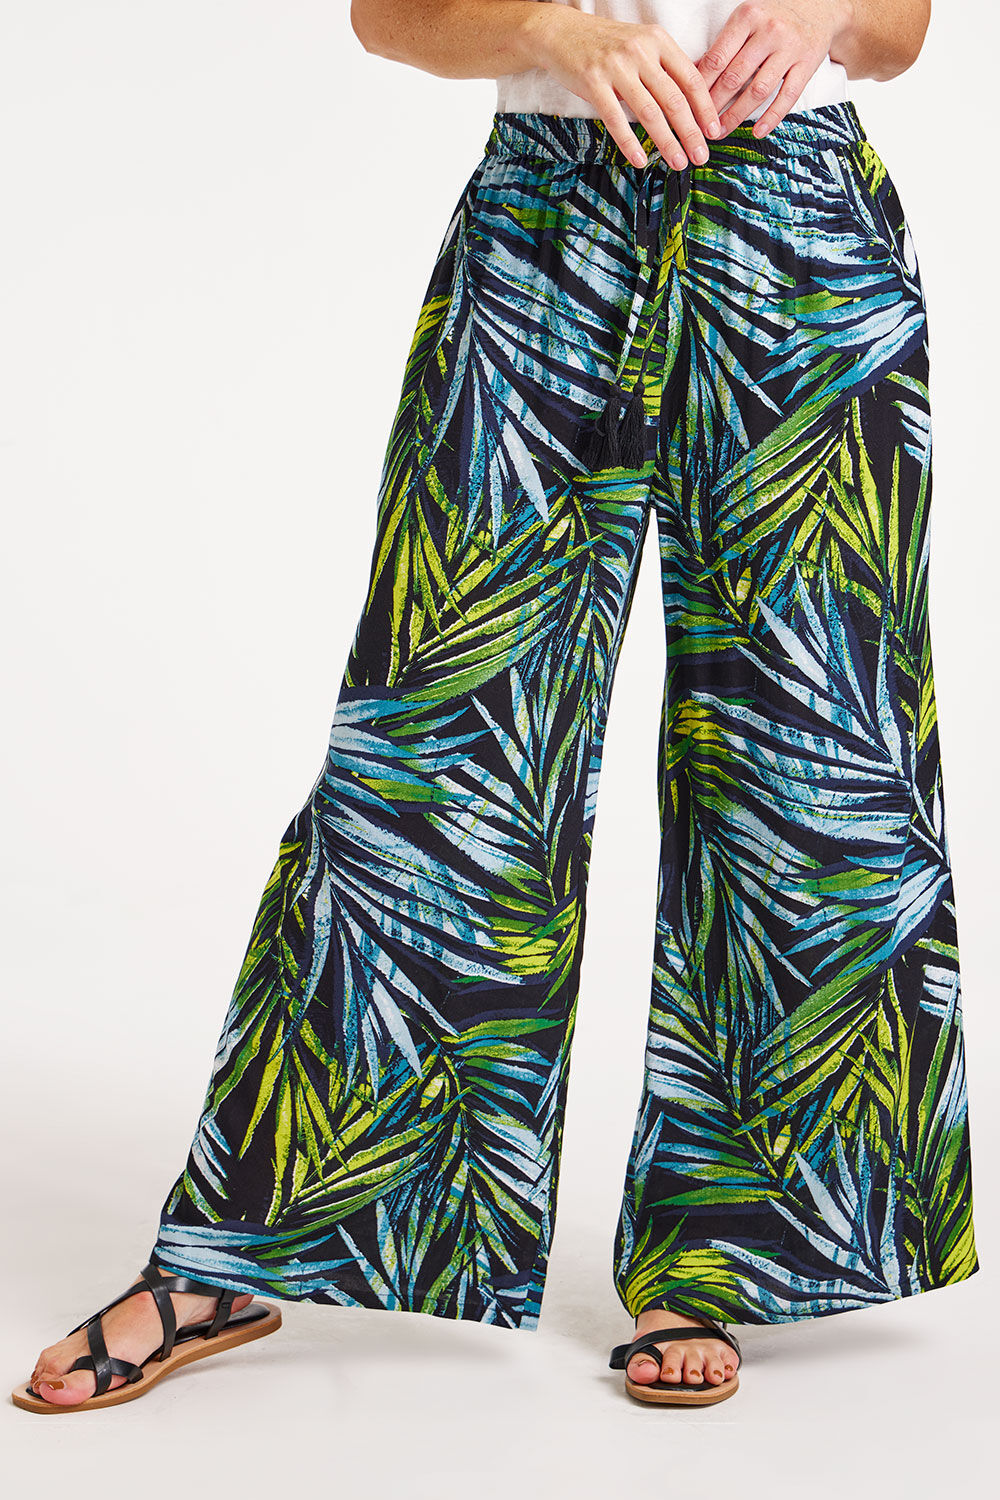 Bonmarche Women’s Black and Green Viscose Palm Print Wide Leg Elasticated Trousers, Size: 26